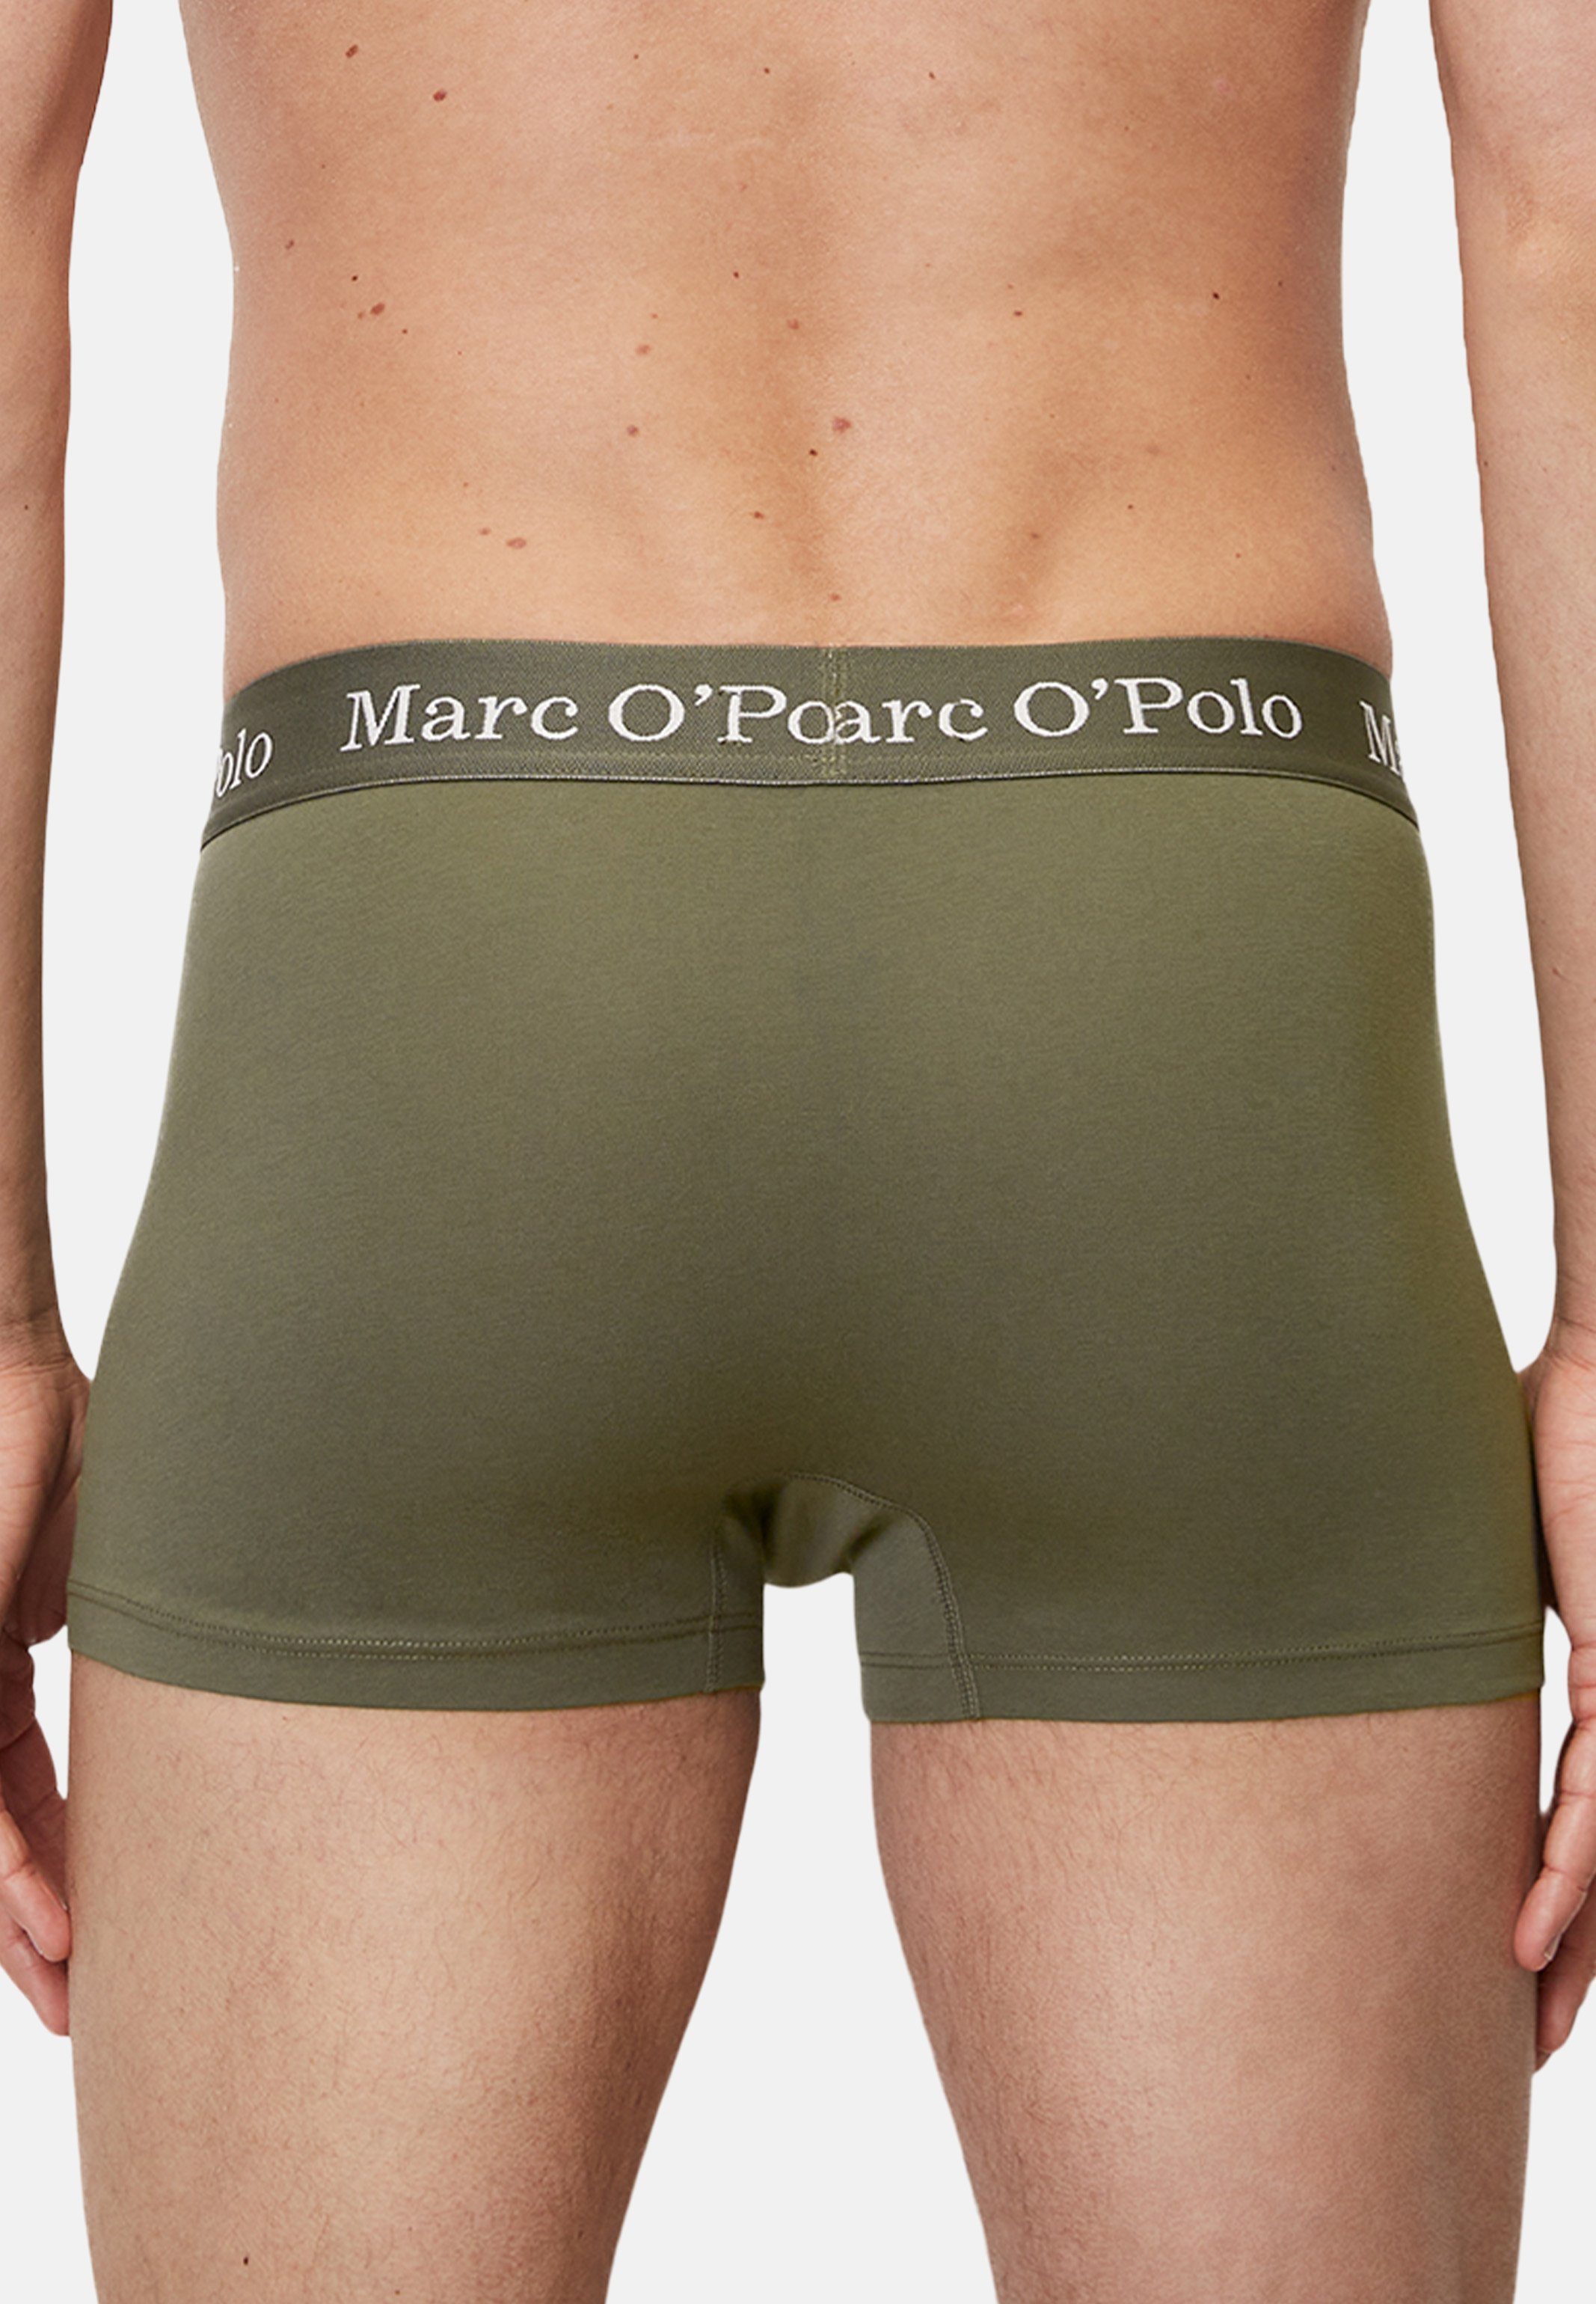 Ohne - Pant Boxer (Spar-Set, Cotton Baumwolle Organic 6er Beetle/Grey Marc Pack 6-St) Elements - Melange/Black Retro Retro / Eingriff Short O'Polo -